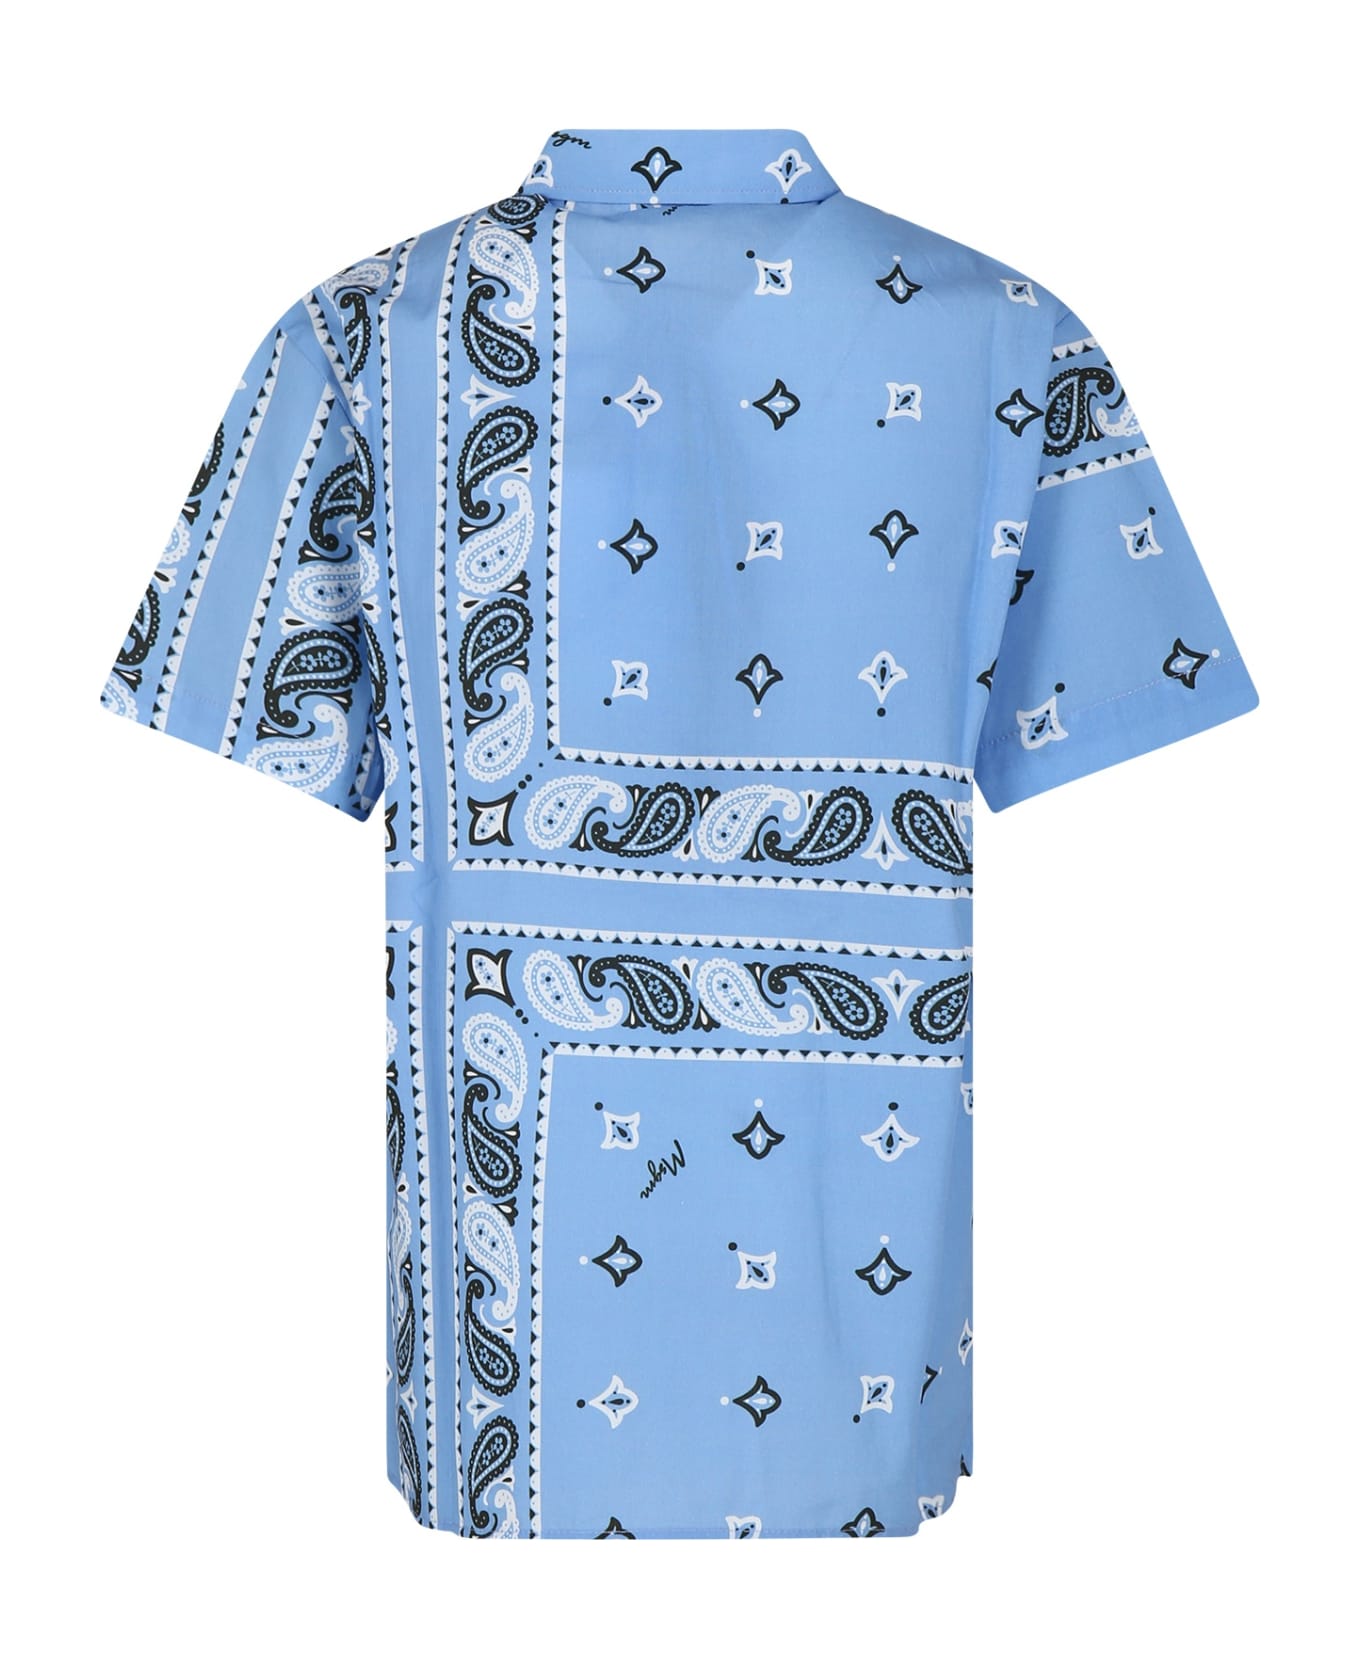 MSGM Light Blue Shirt For Boy With Paisley Print - Light Blue